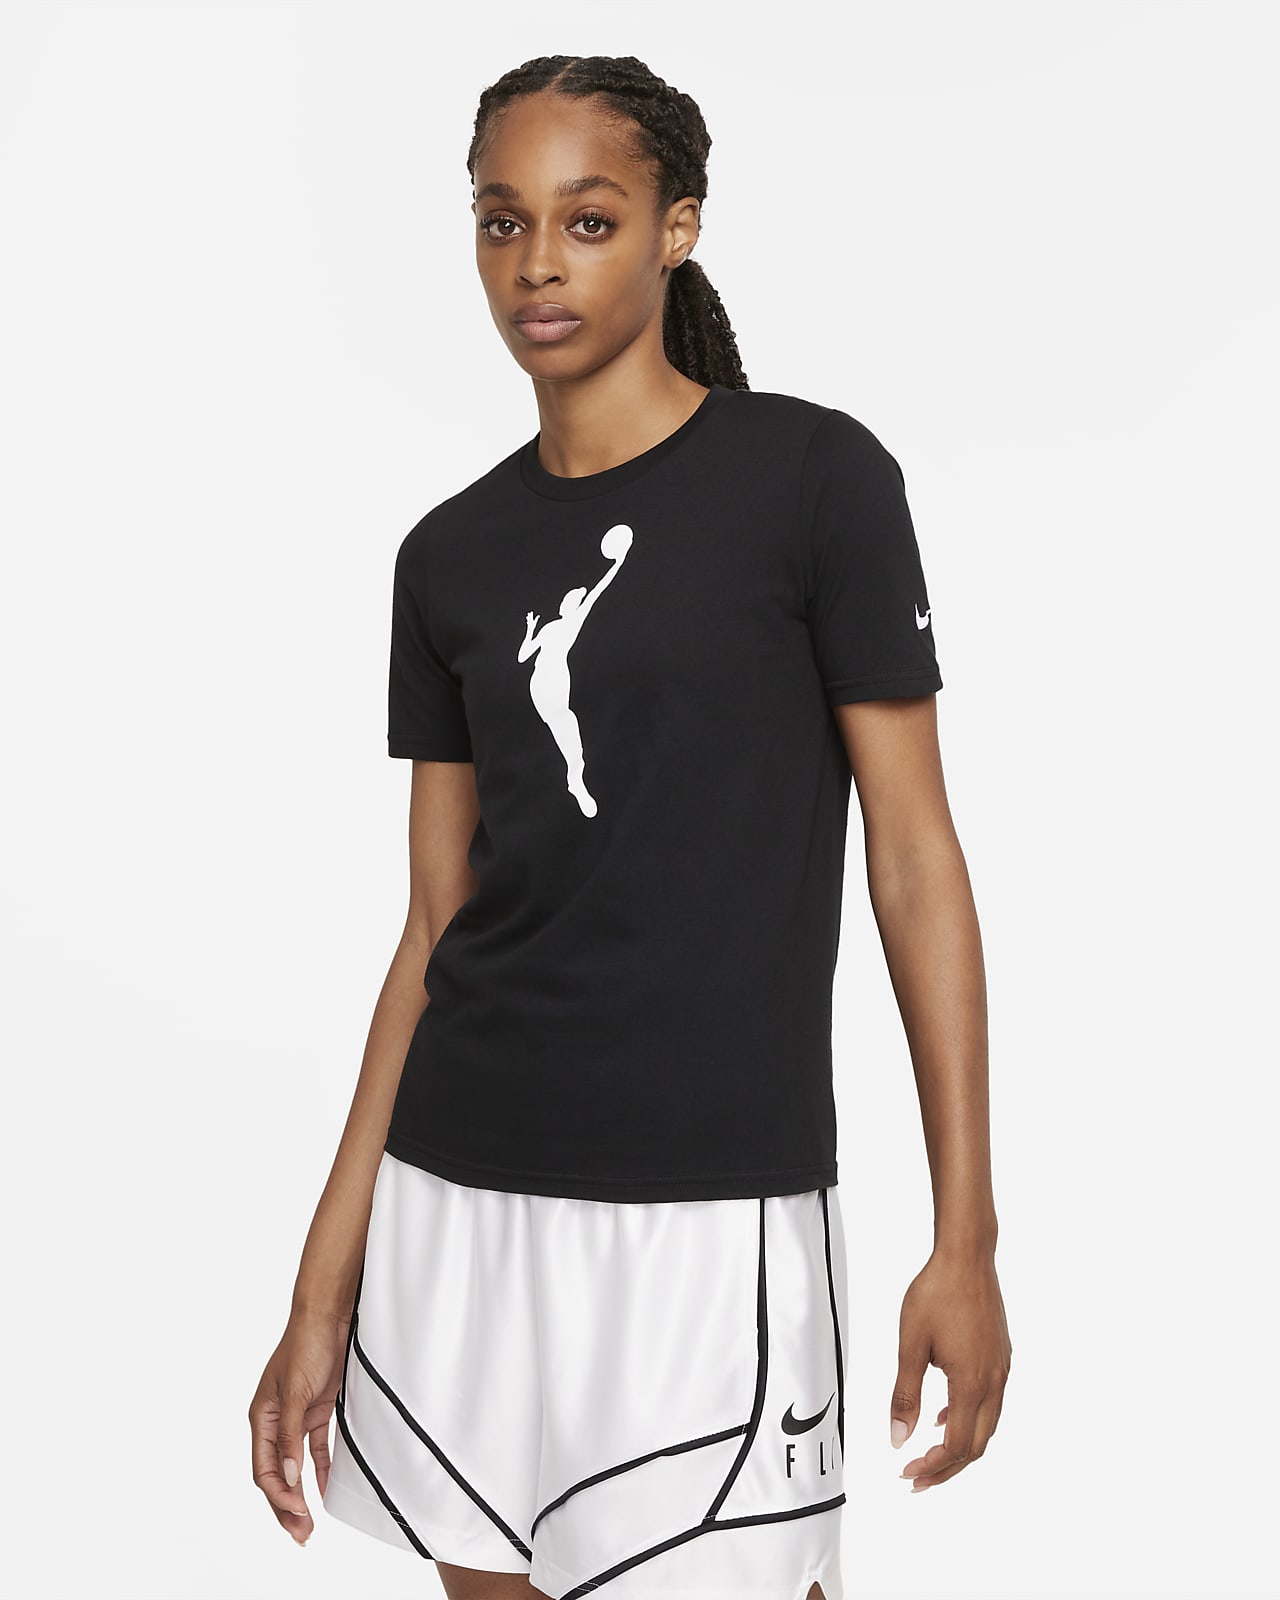 Team 13 Samarreta Nike WNBA - Nen/a